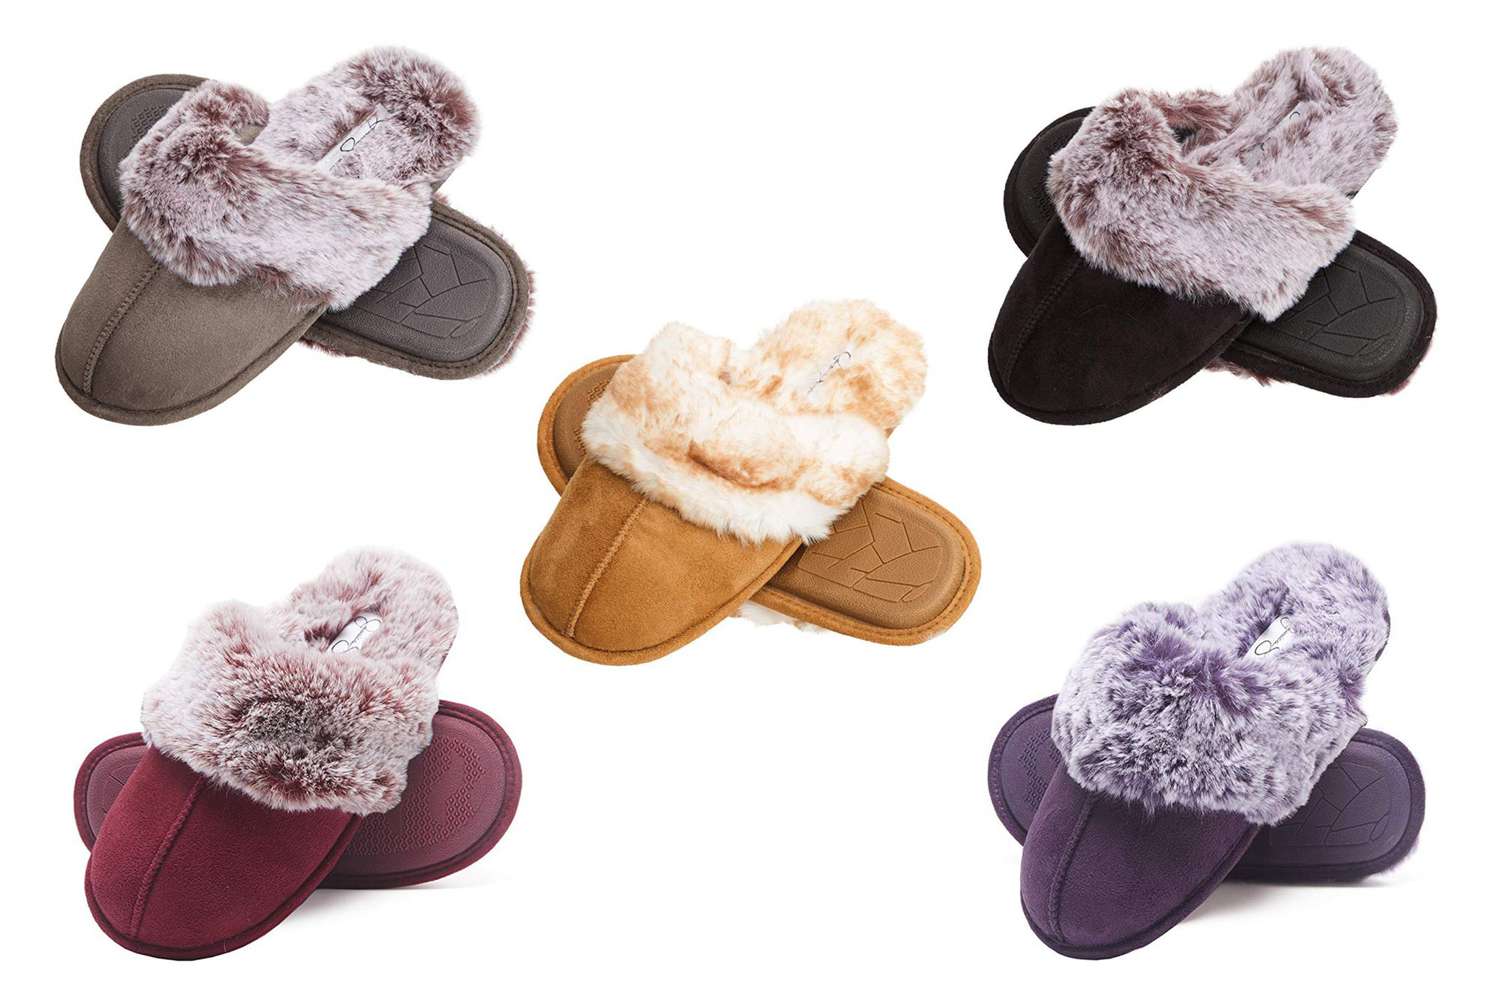 jessica simpson fuzzy slippers